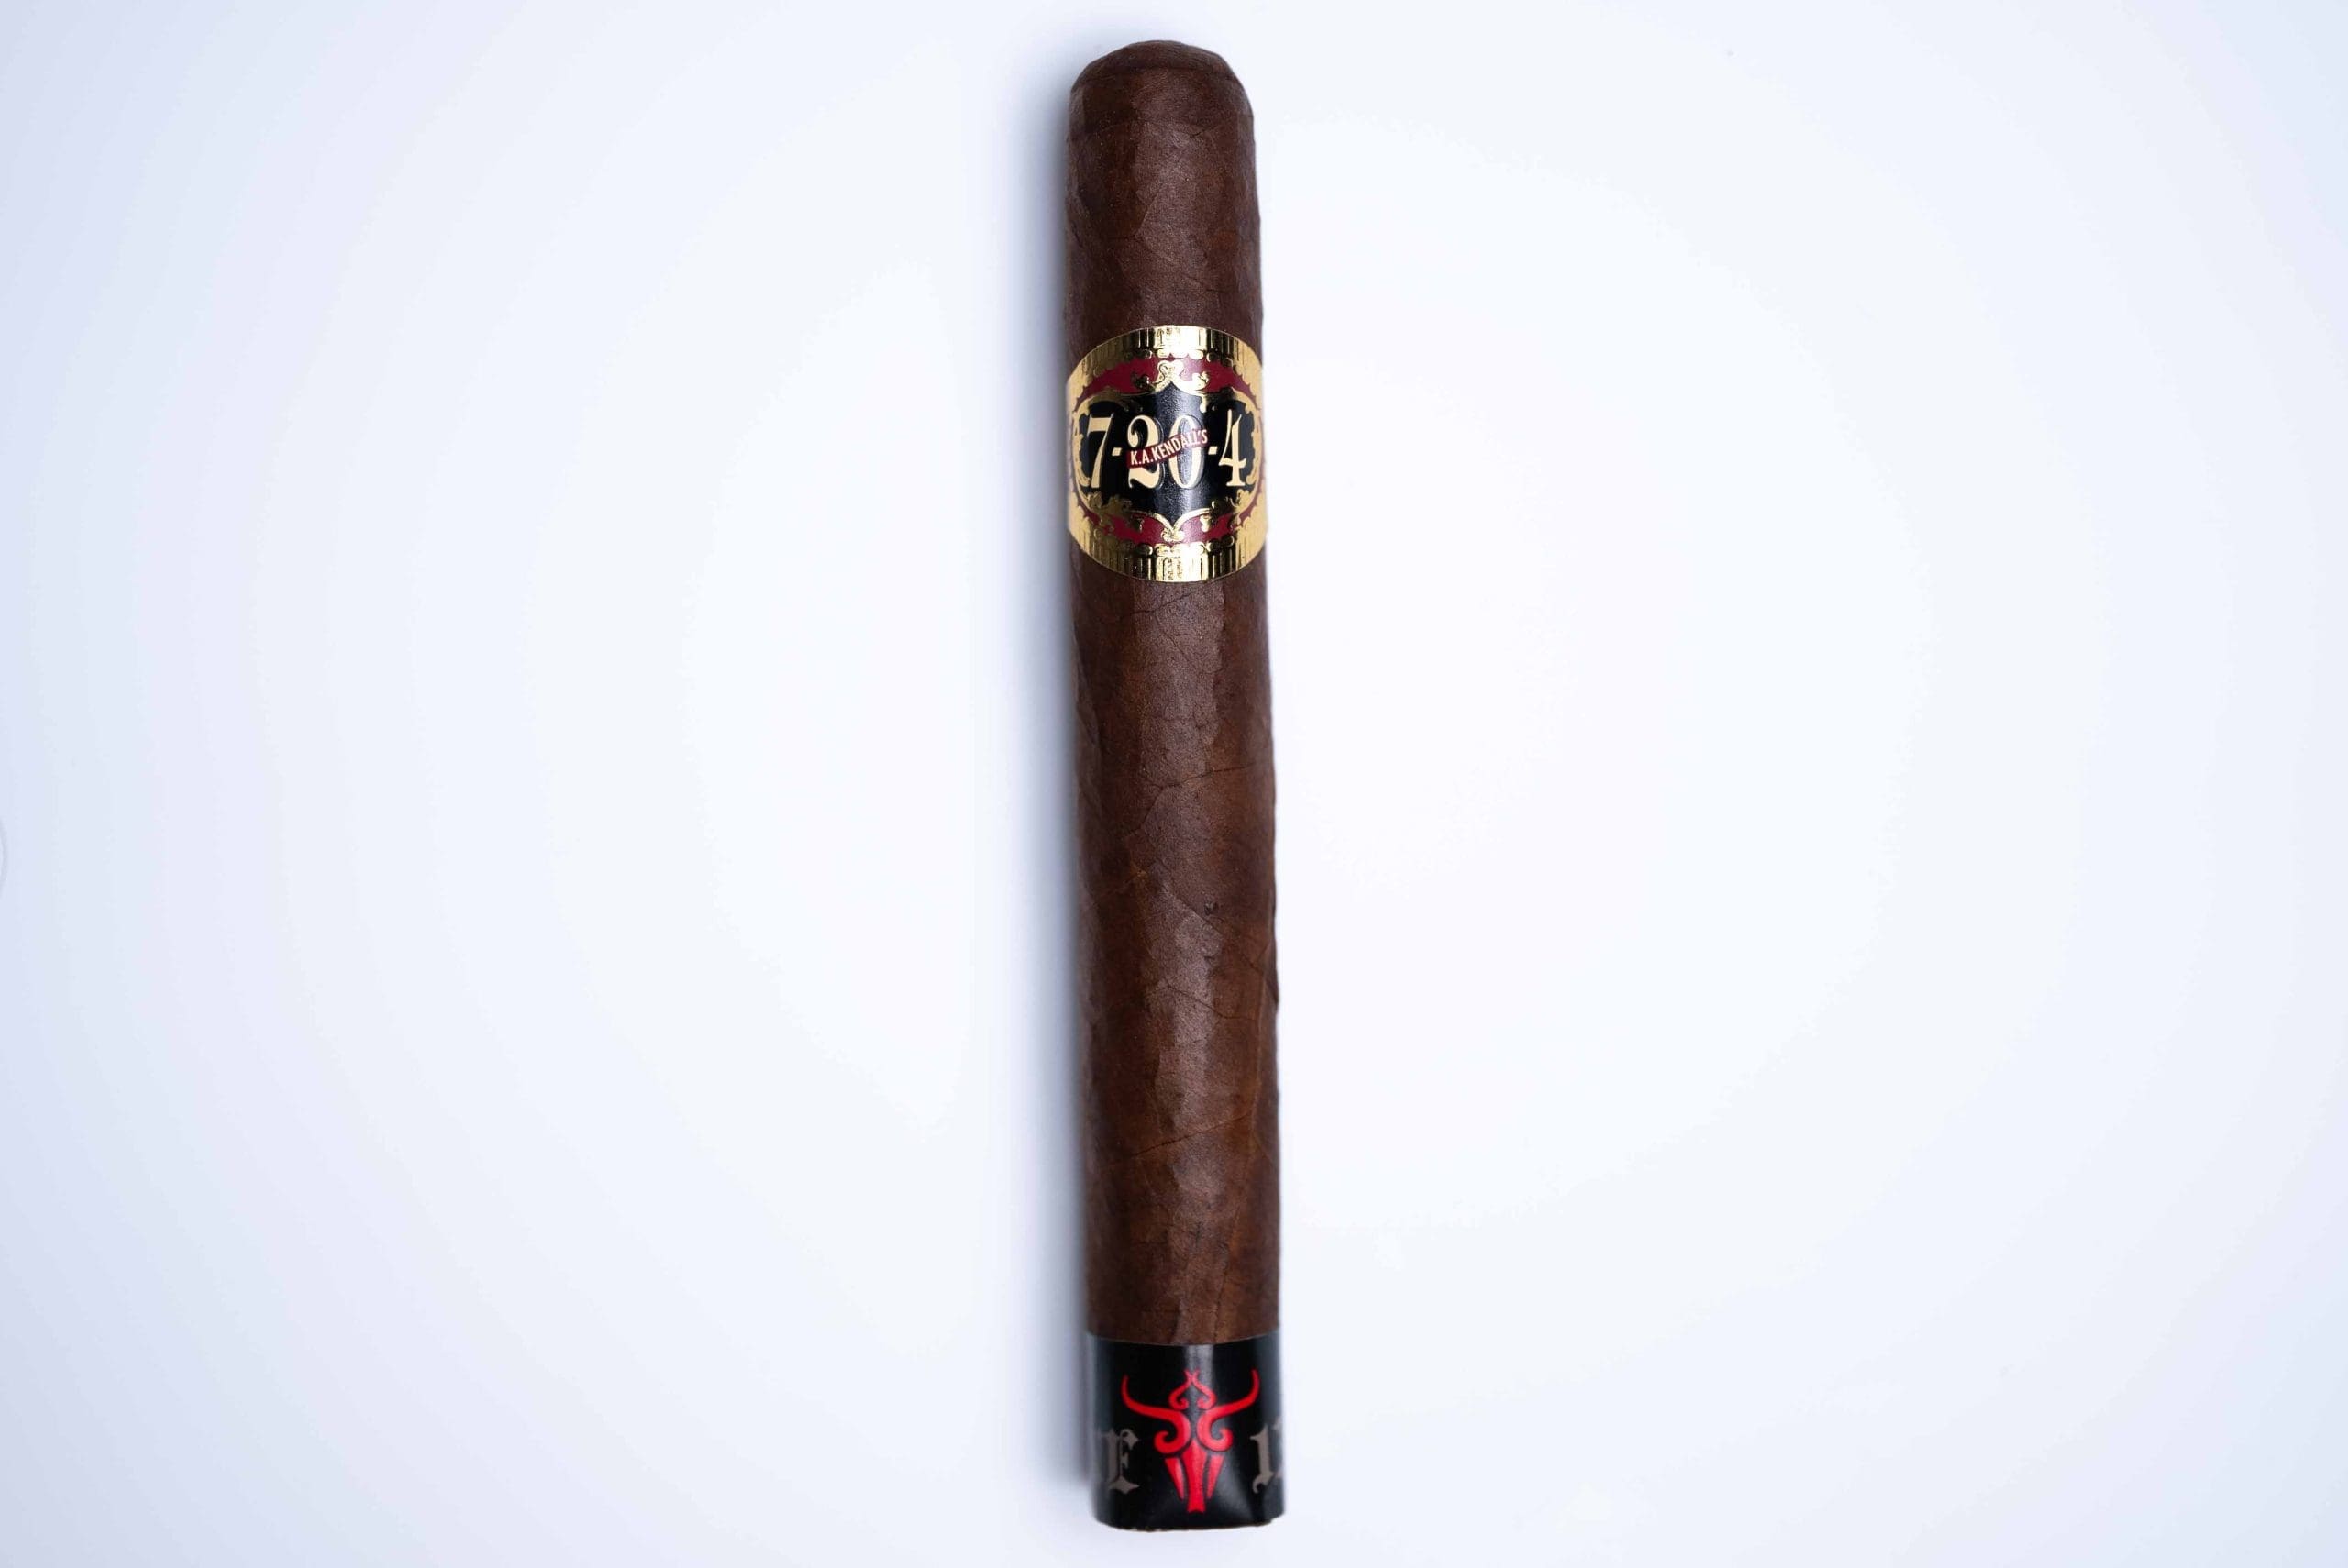 7-20-4 One 13 Toro cigar